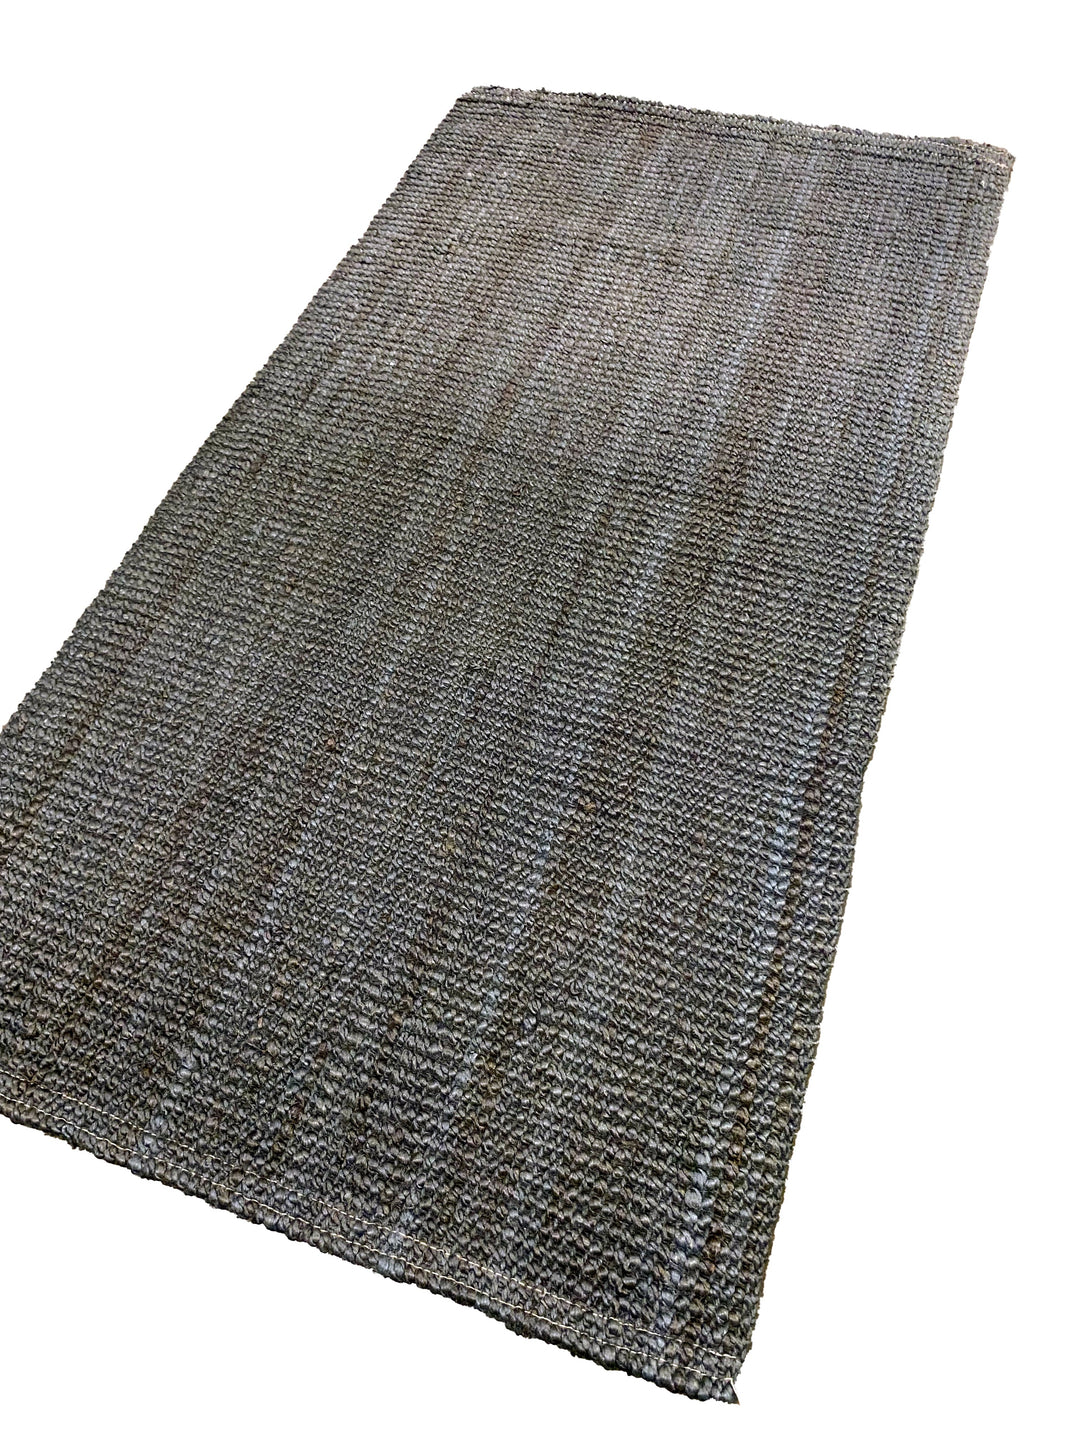 Adah - Size: 4.11 x 2.7 - Imam Carpet Co